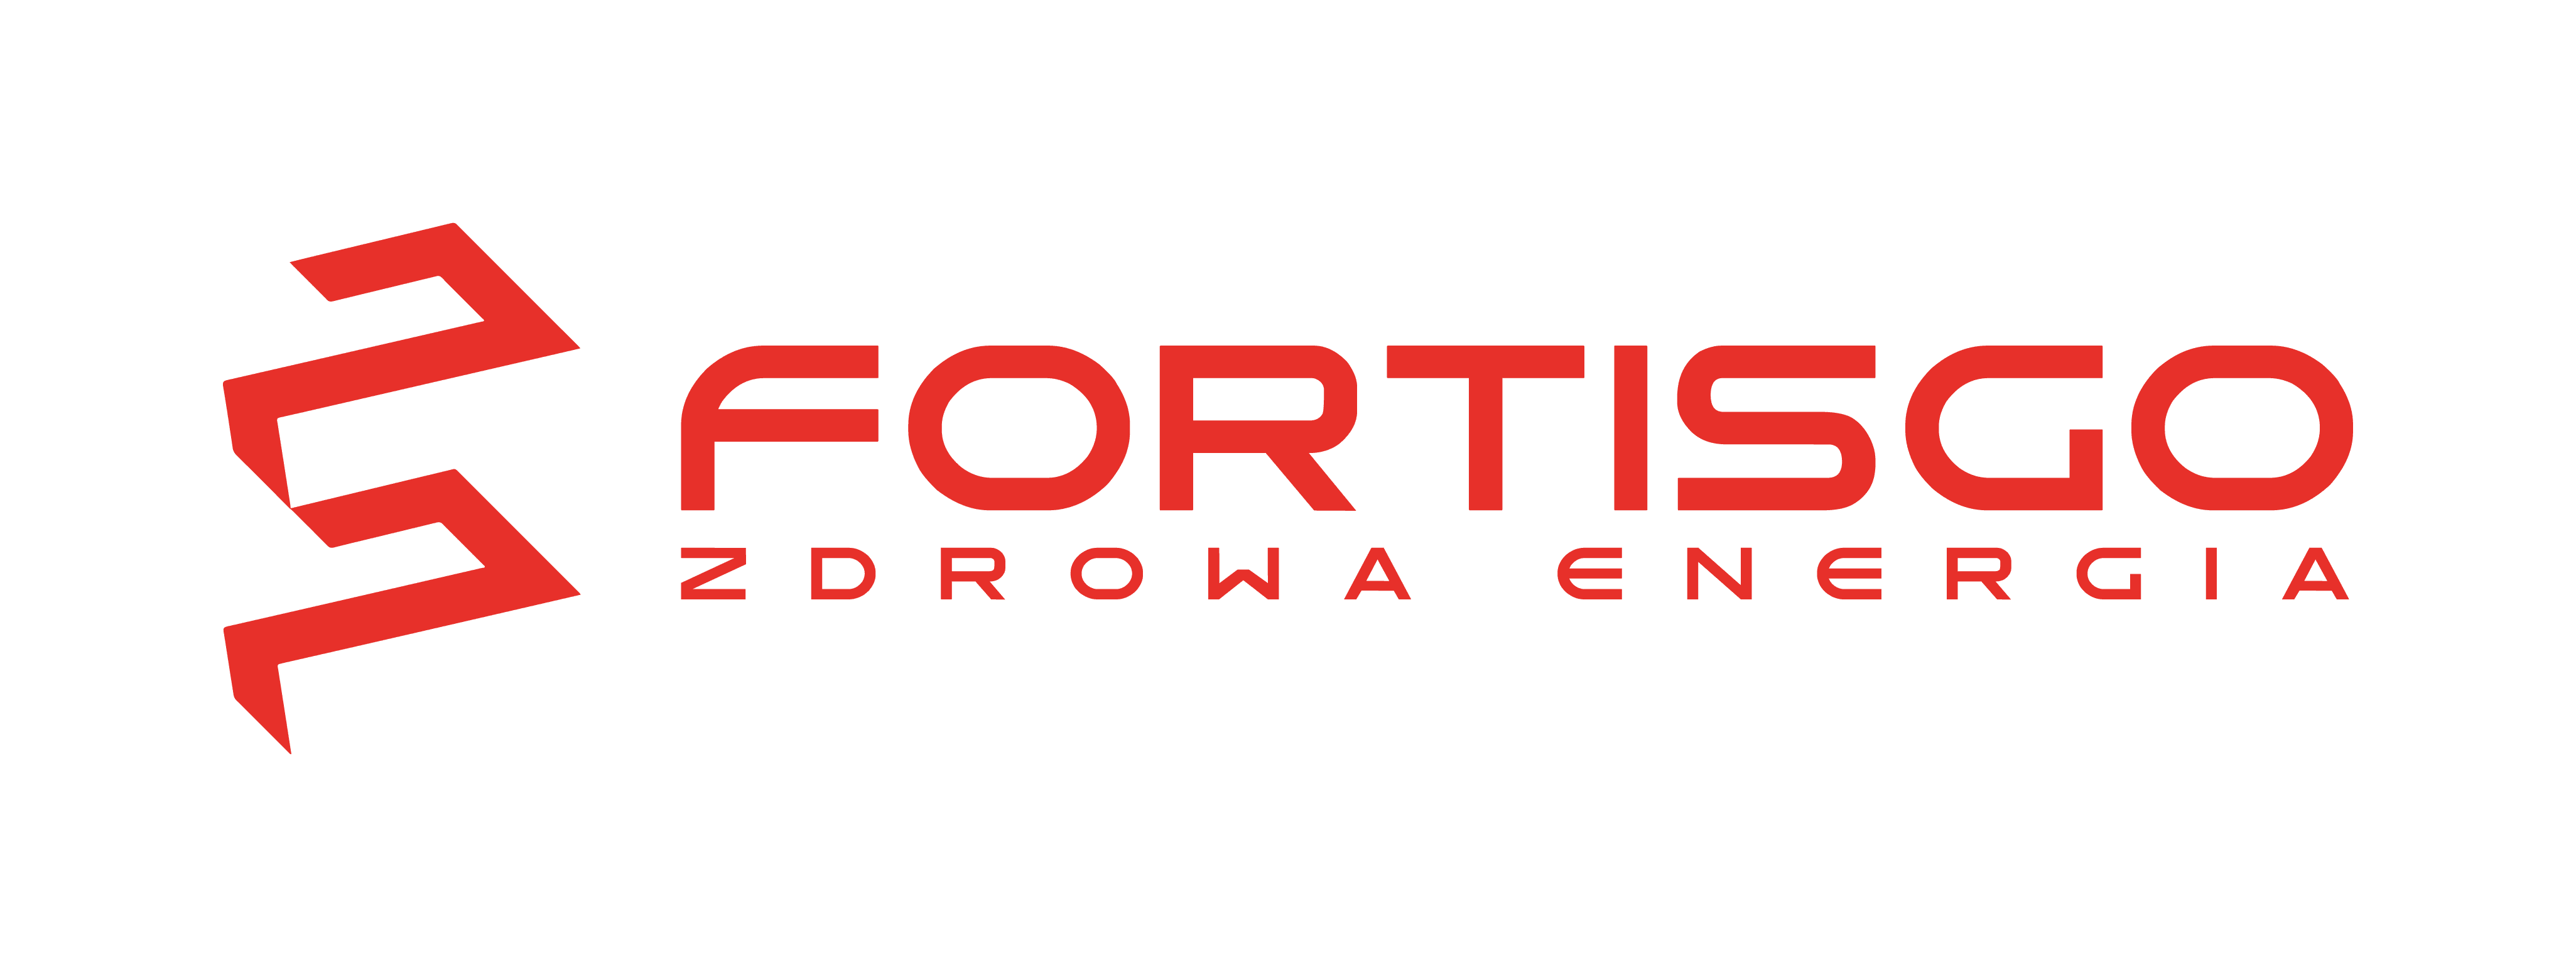 logo_fortis